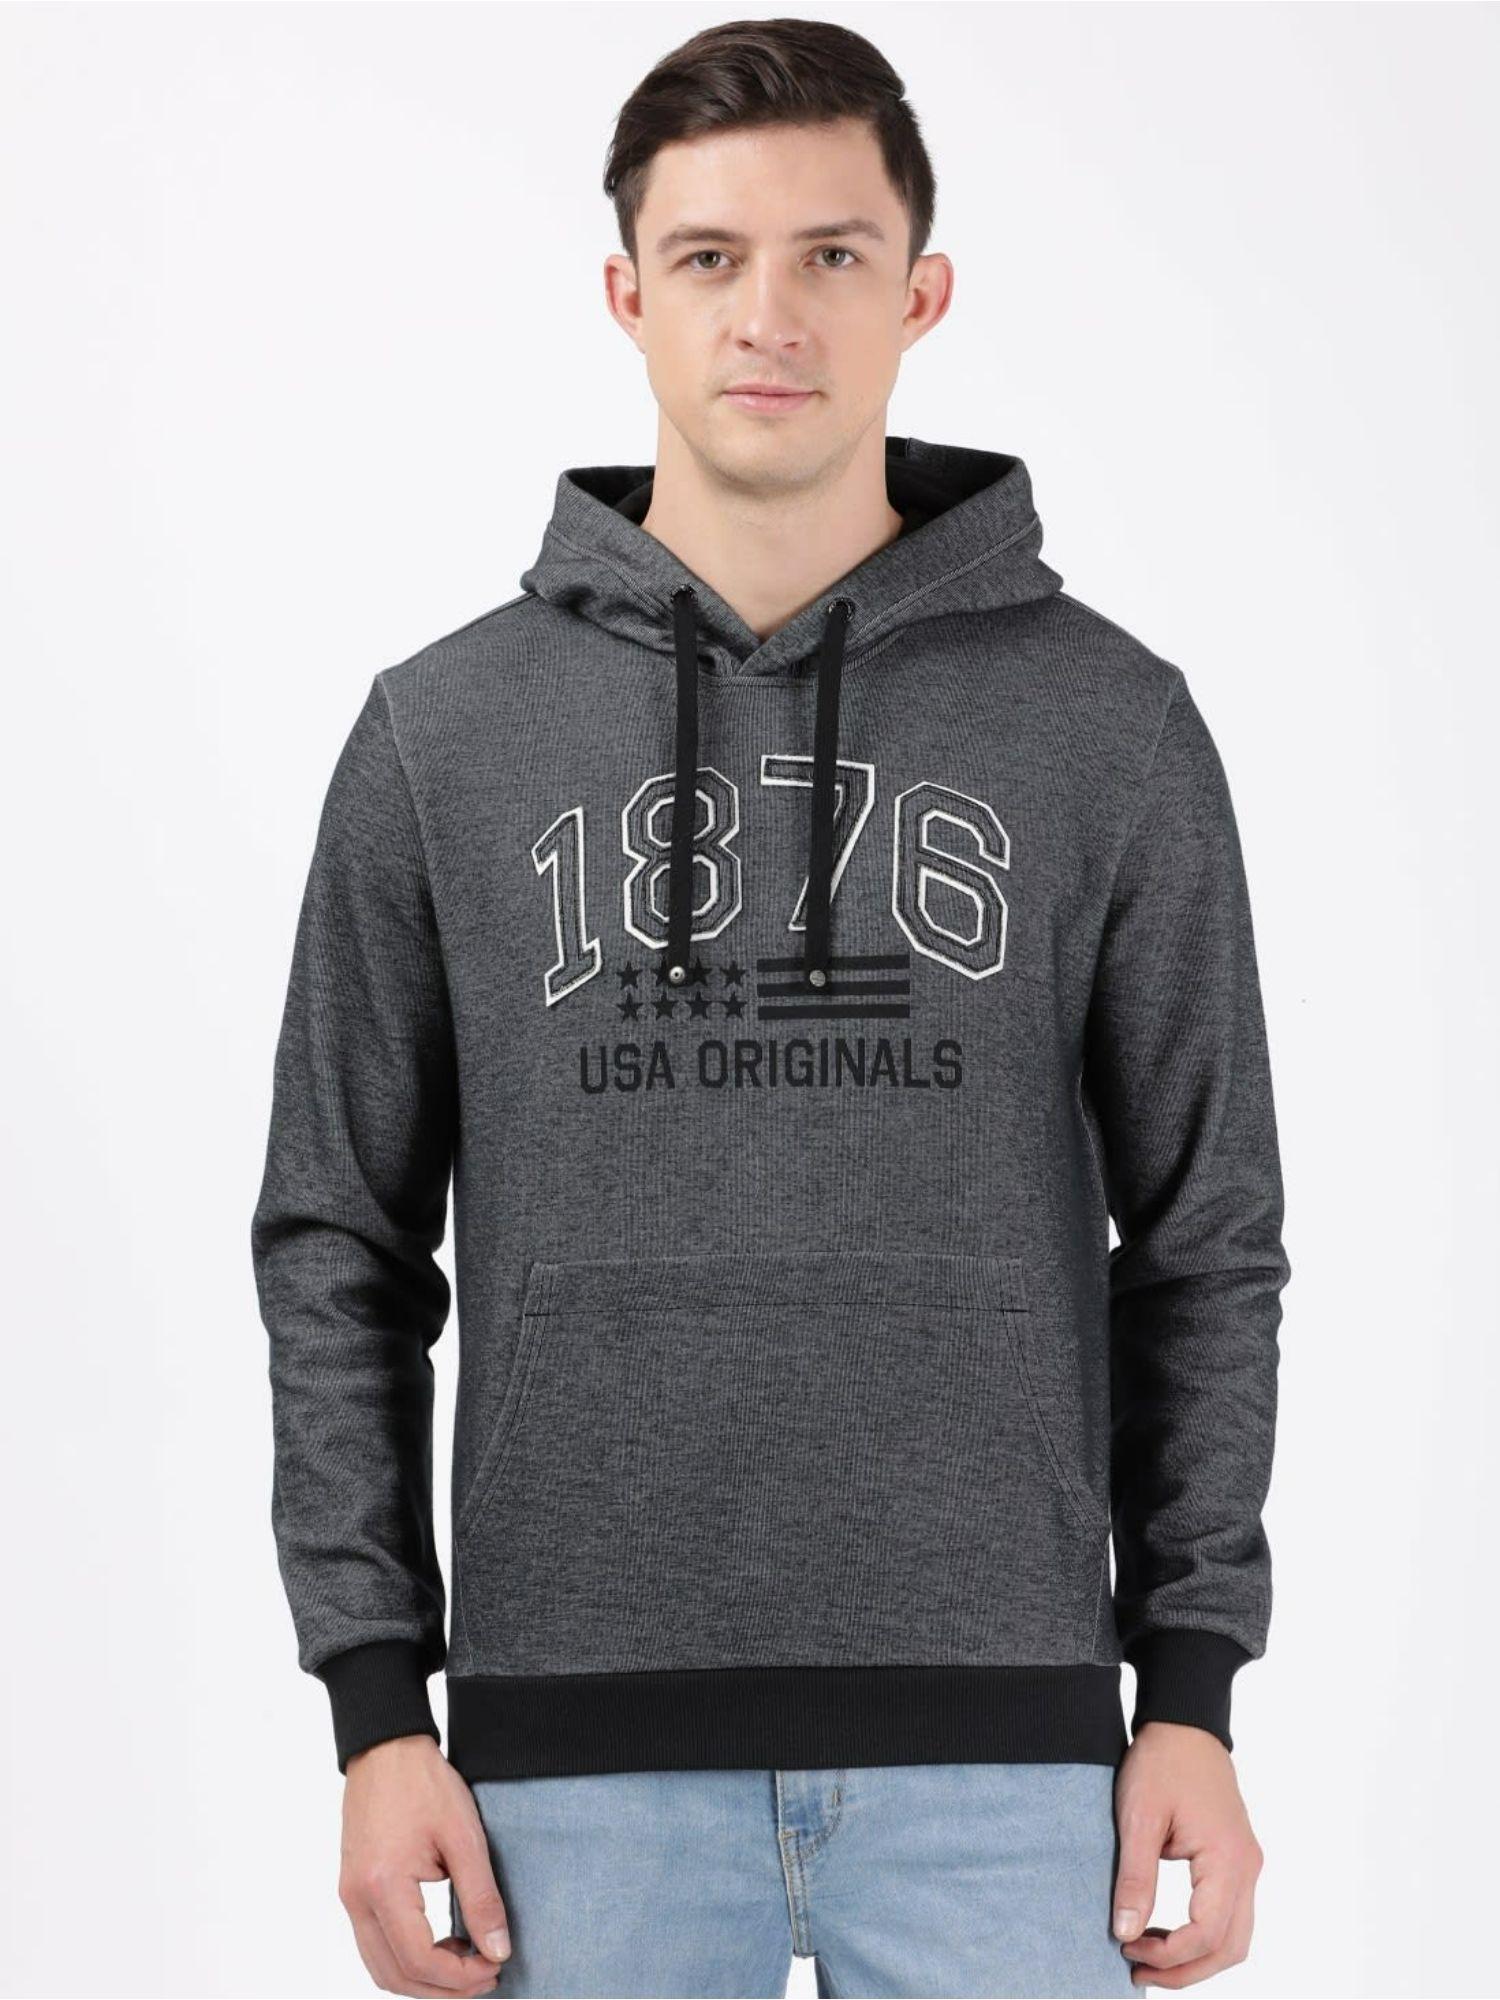 um22 mens cotton rich printed hoodie sweatshirt with side pockets-black